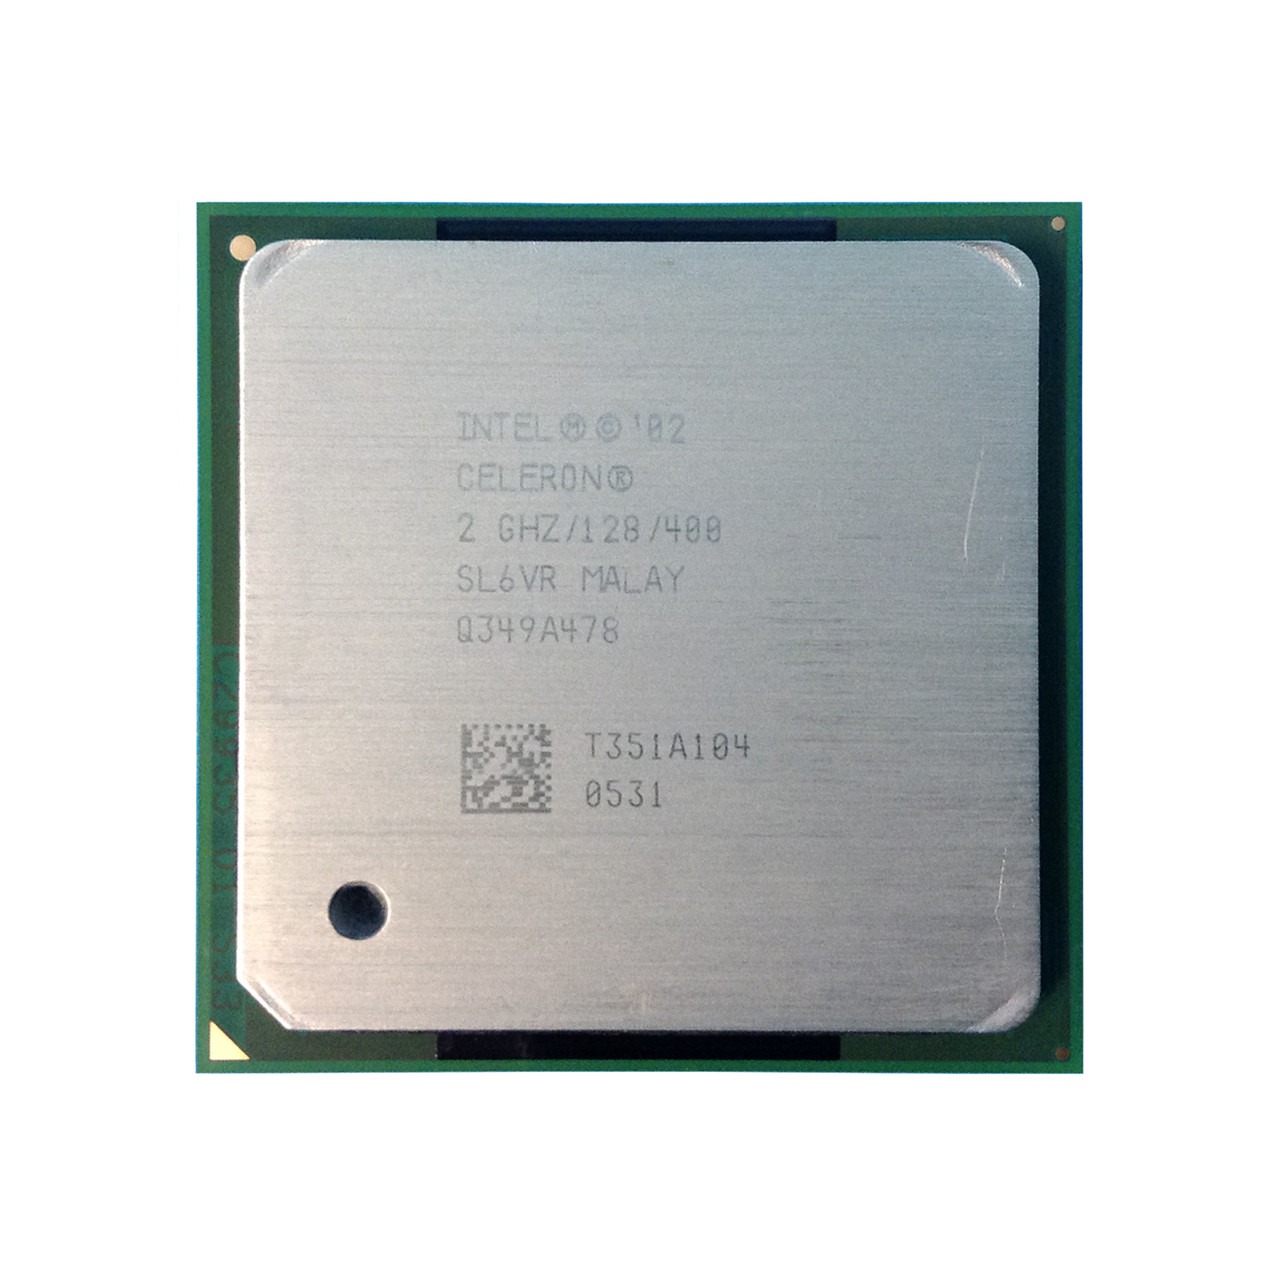 Dell J1149 Celeron 2.0Ghz 128K 400FSB Processor